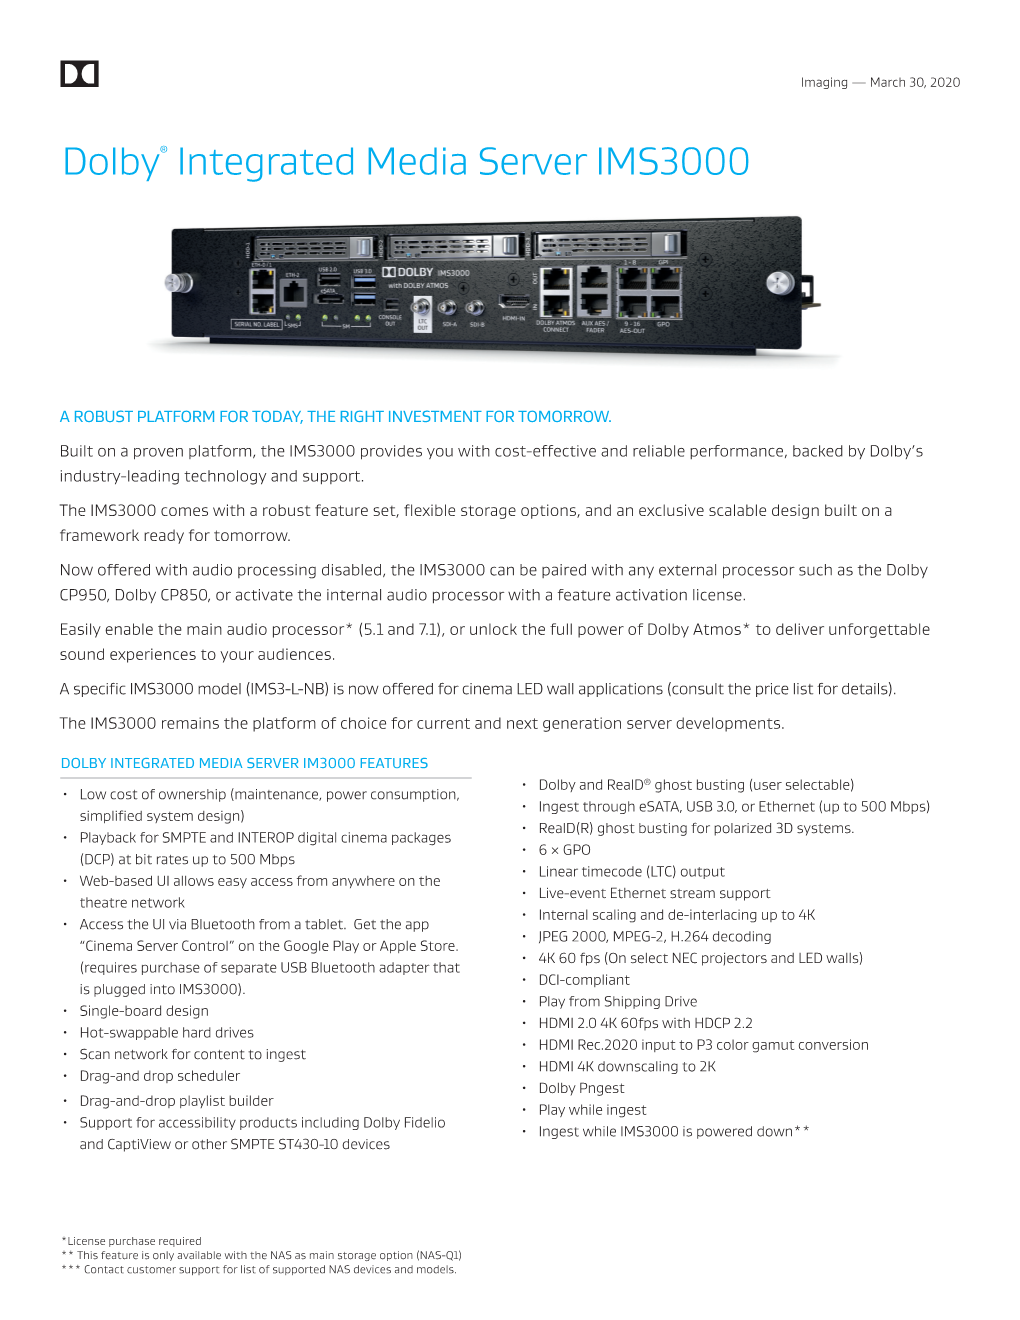 Dolby® Integrated Media Server IMS3000